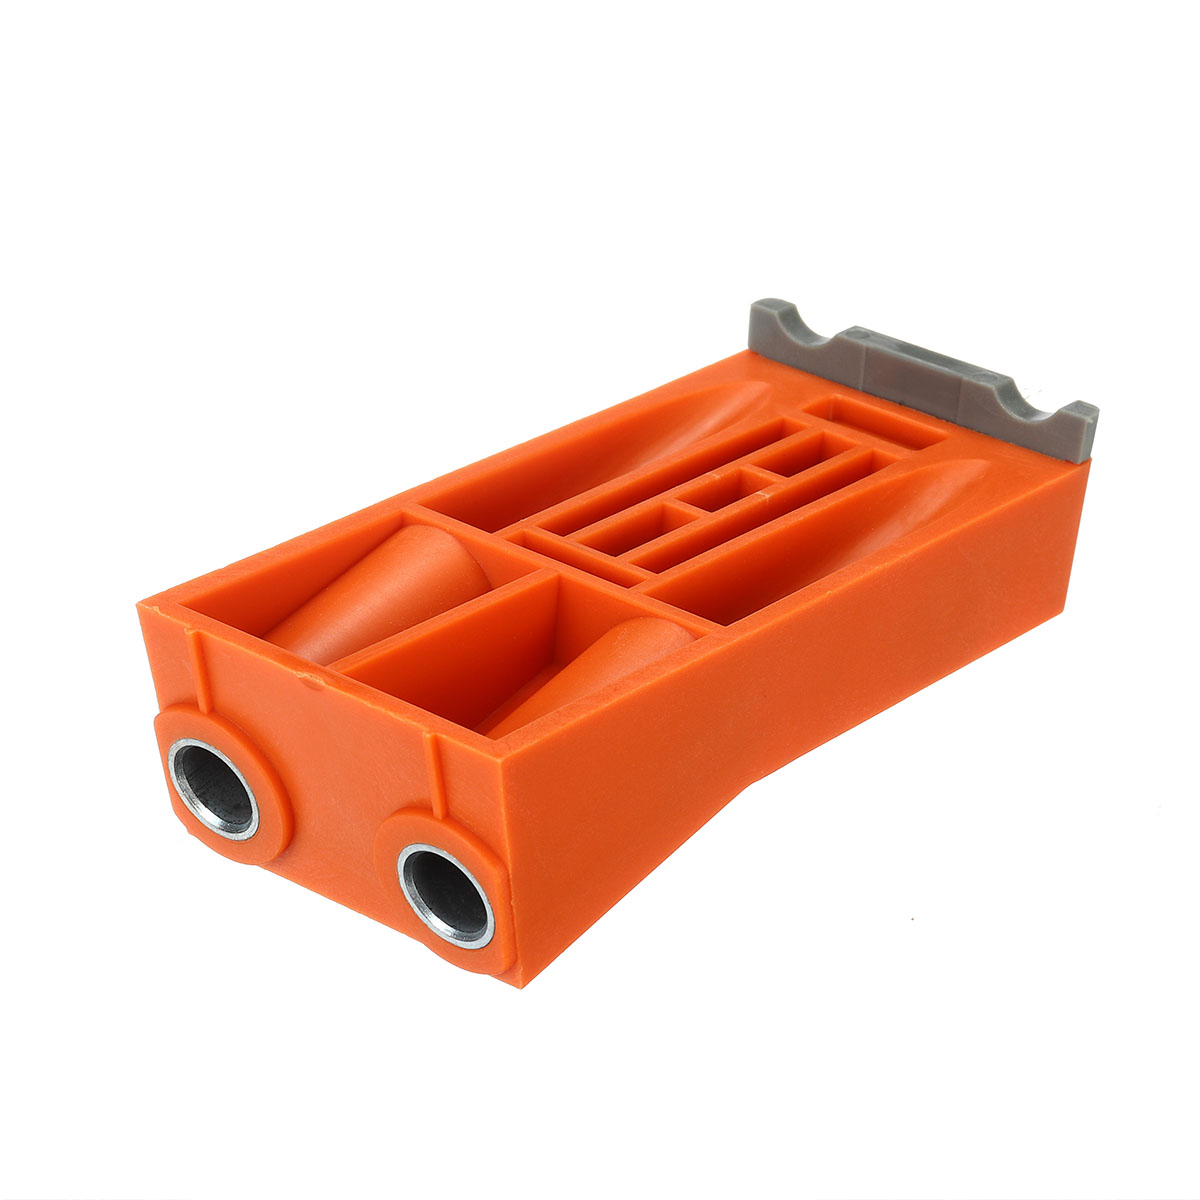 Pocket-Hole-Jig-Mini-Kit-Machine-System-With-Step-Drill-Bit-Depth-Collar-1650891-4